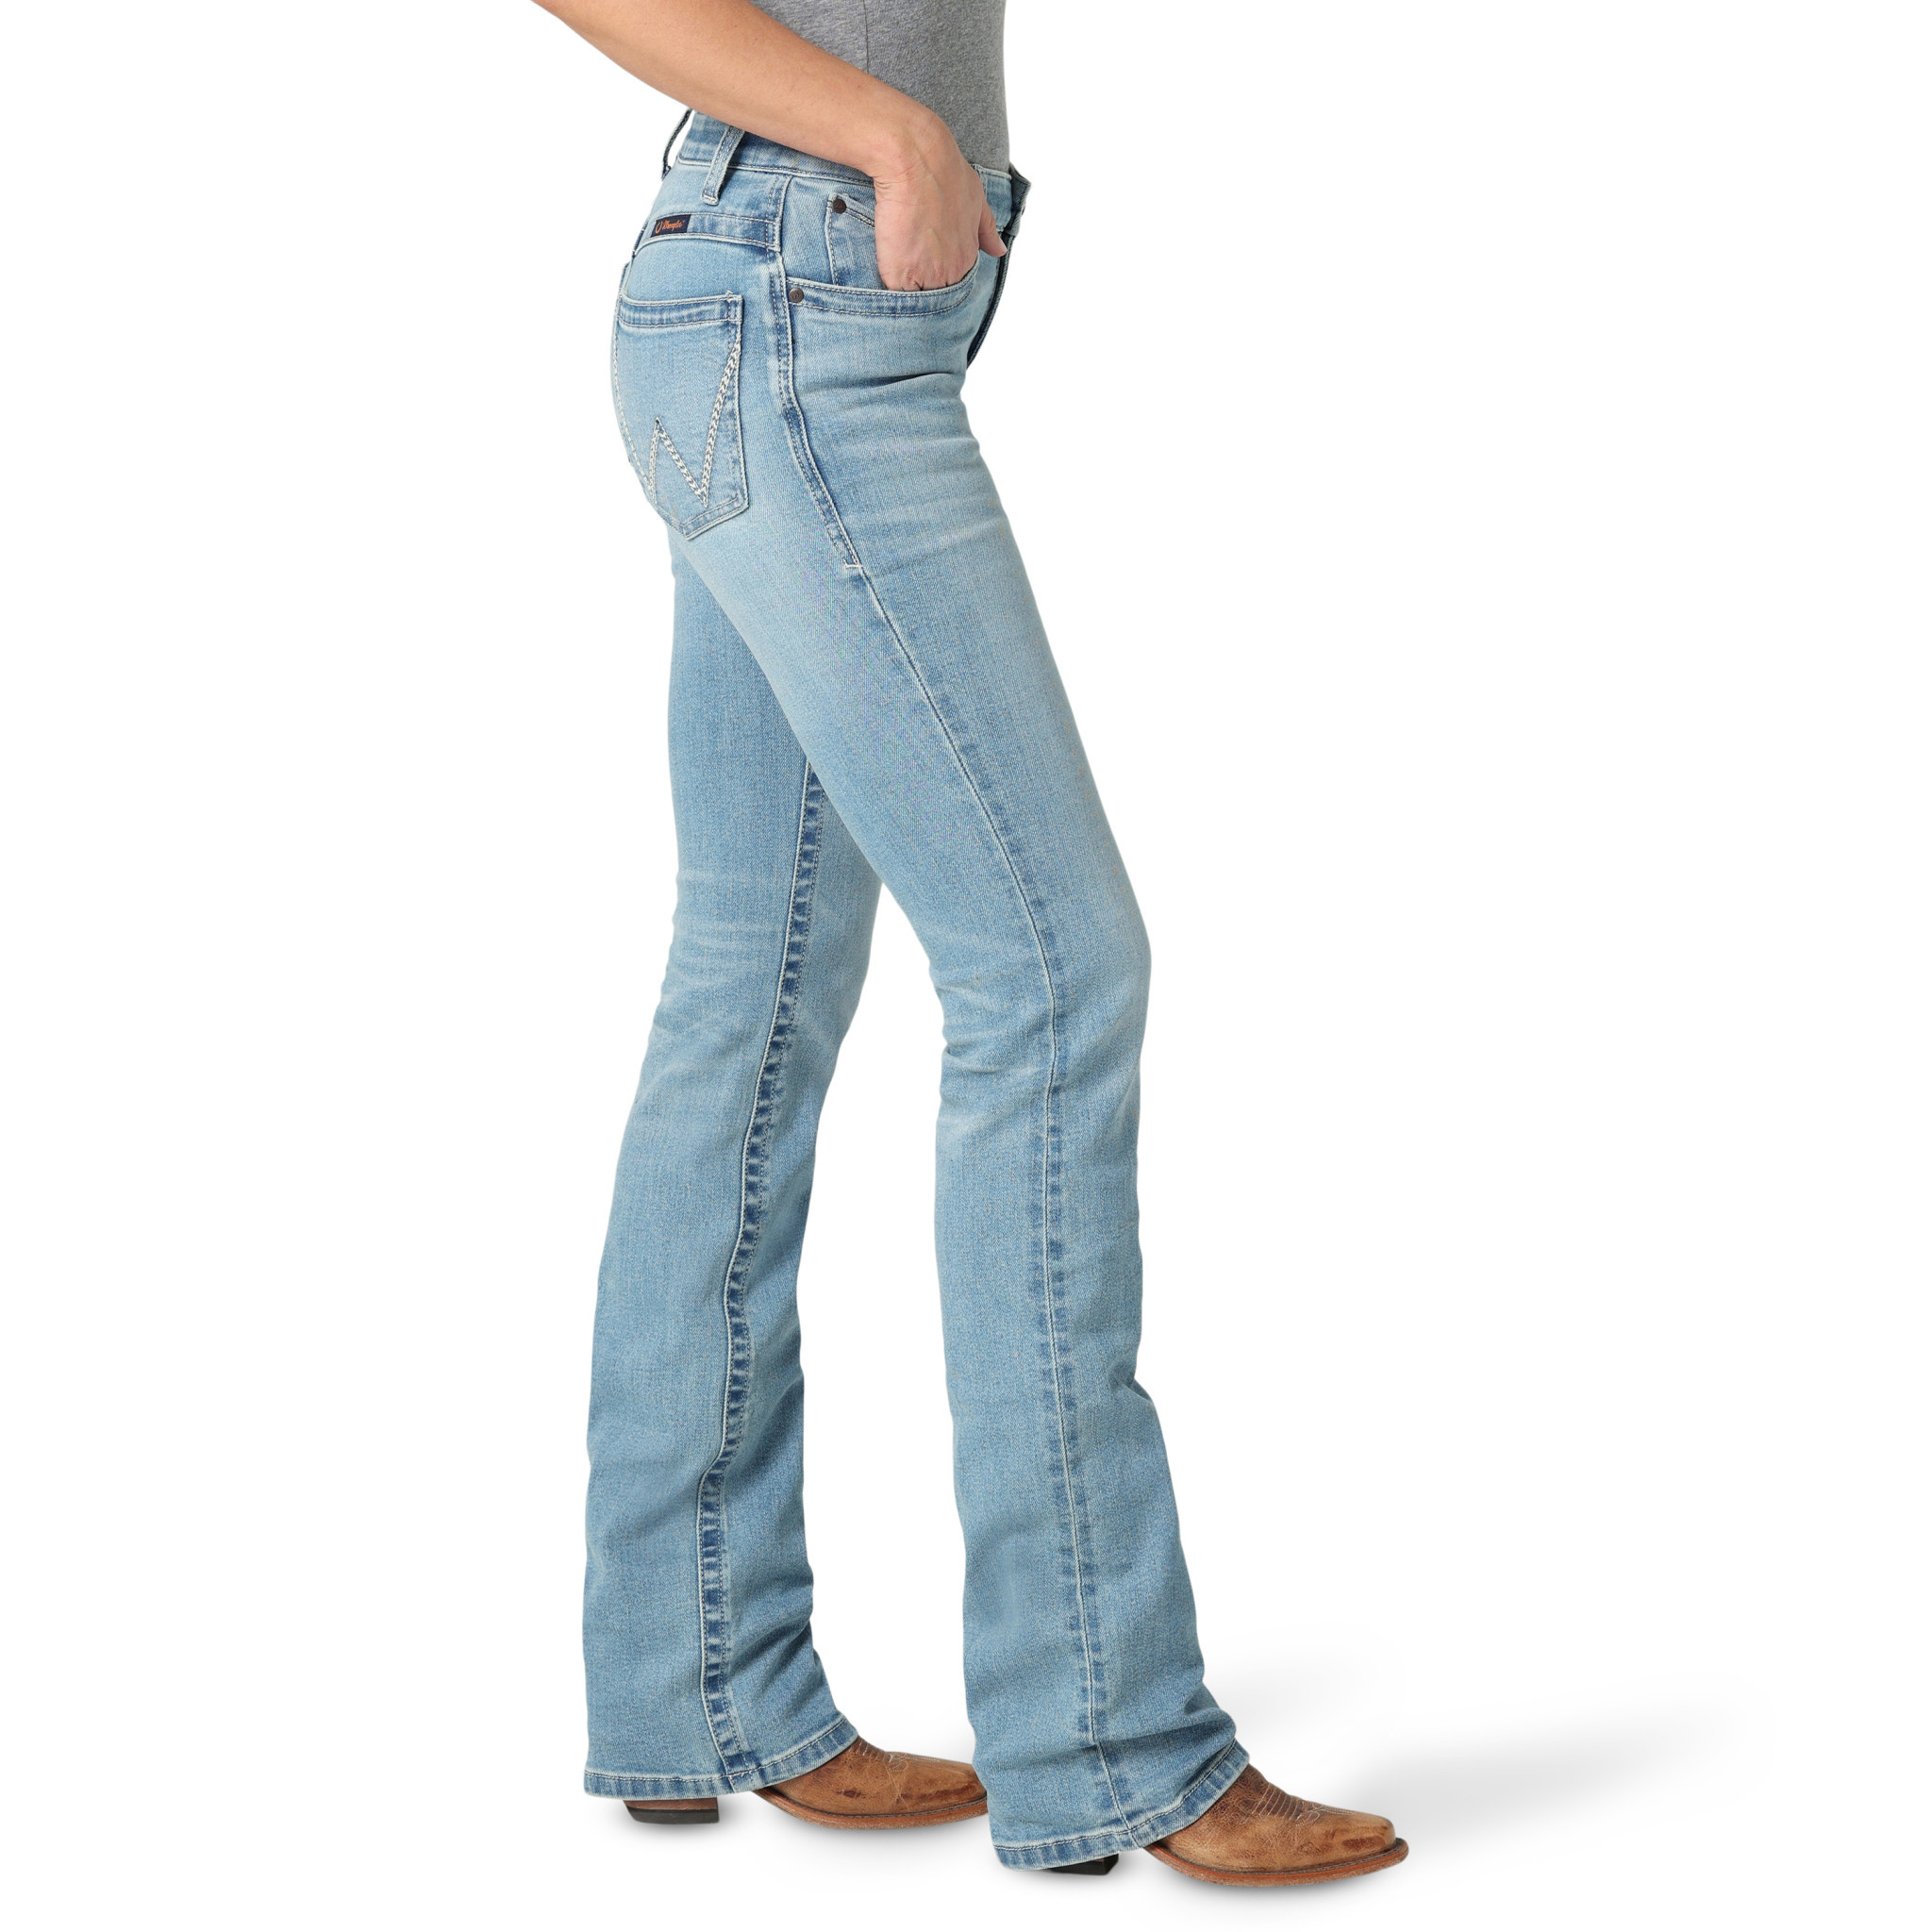 Wrangler high rise wide barrel jeans in mid wash blue